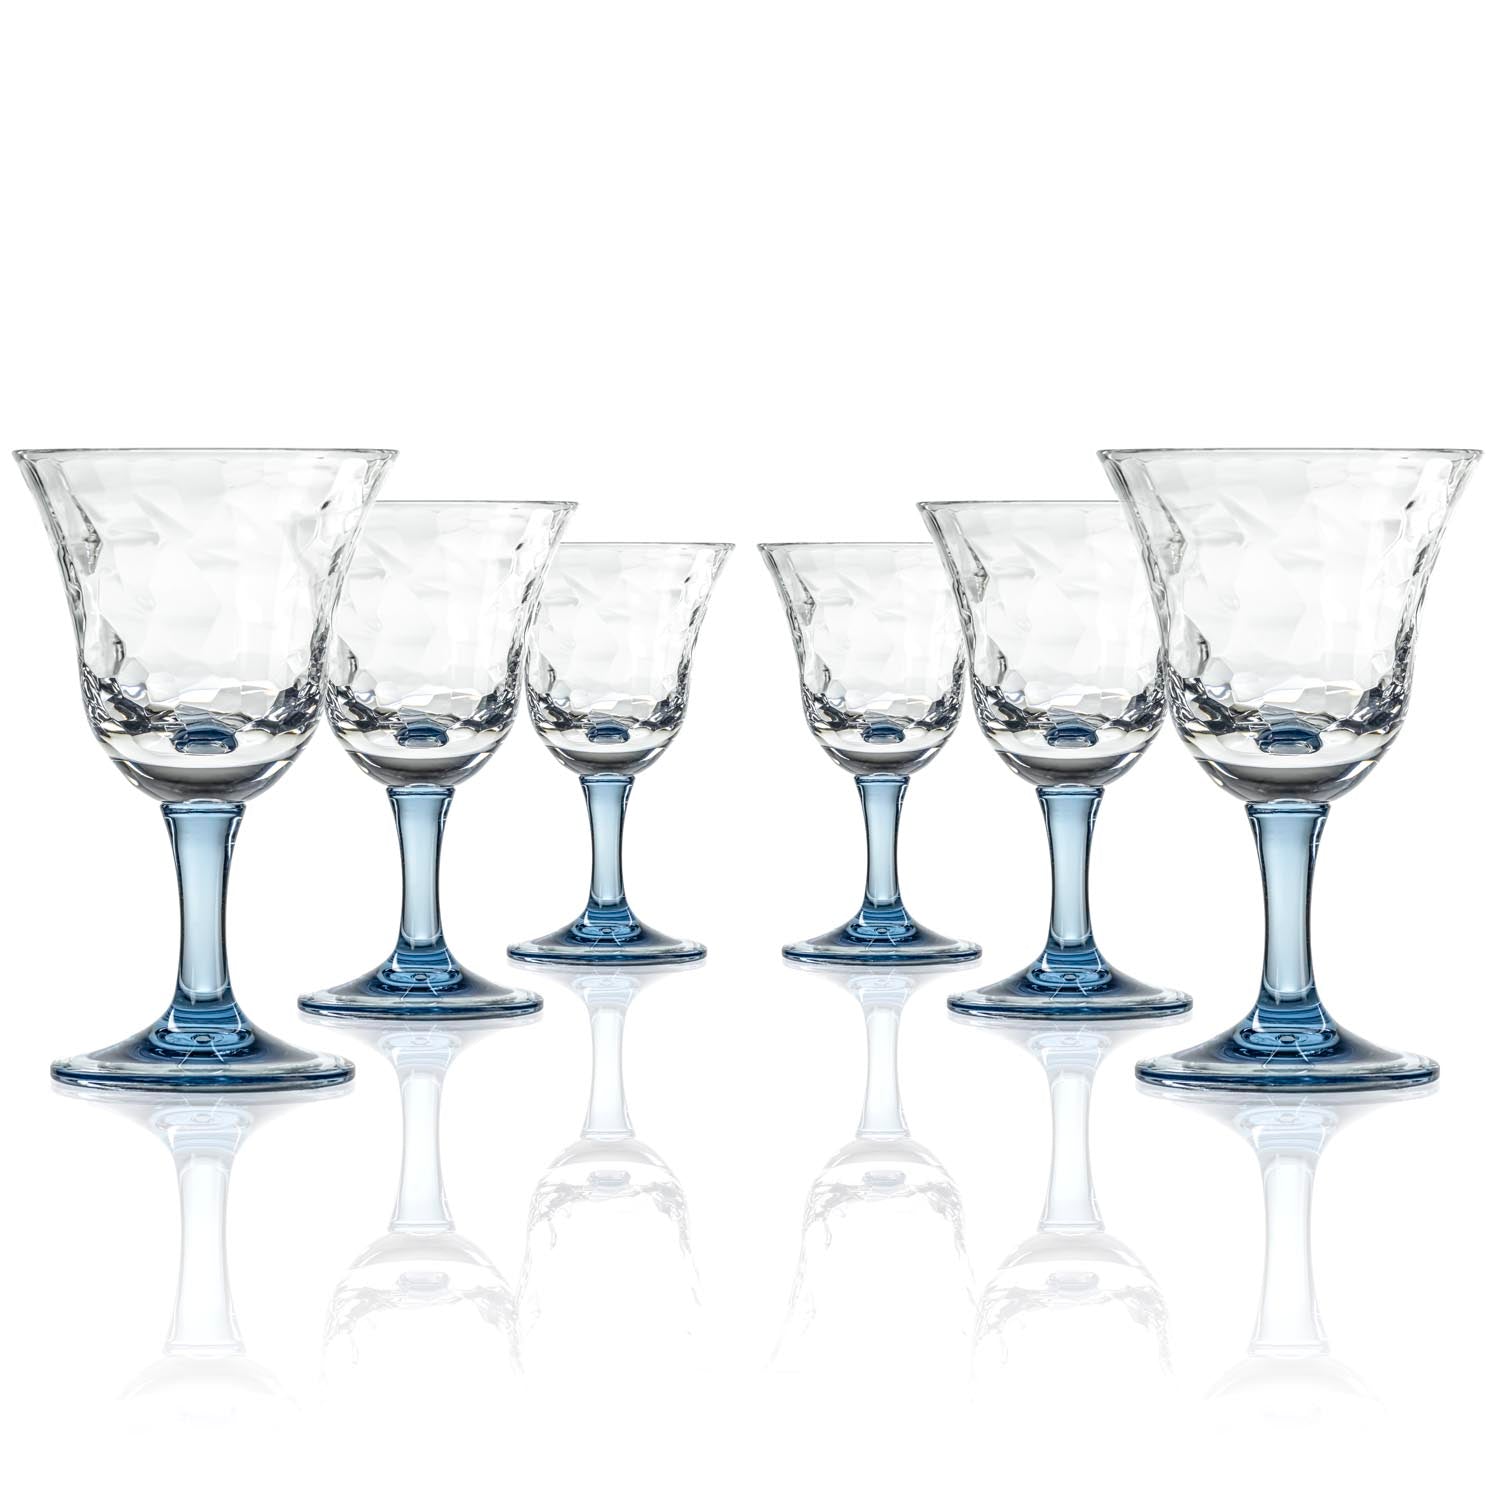 Merritt Designs Cascade Blue 12oz Acrylic Wine Stemware set of 6 front view on a white background